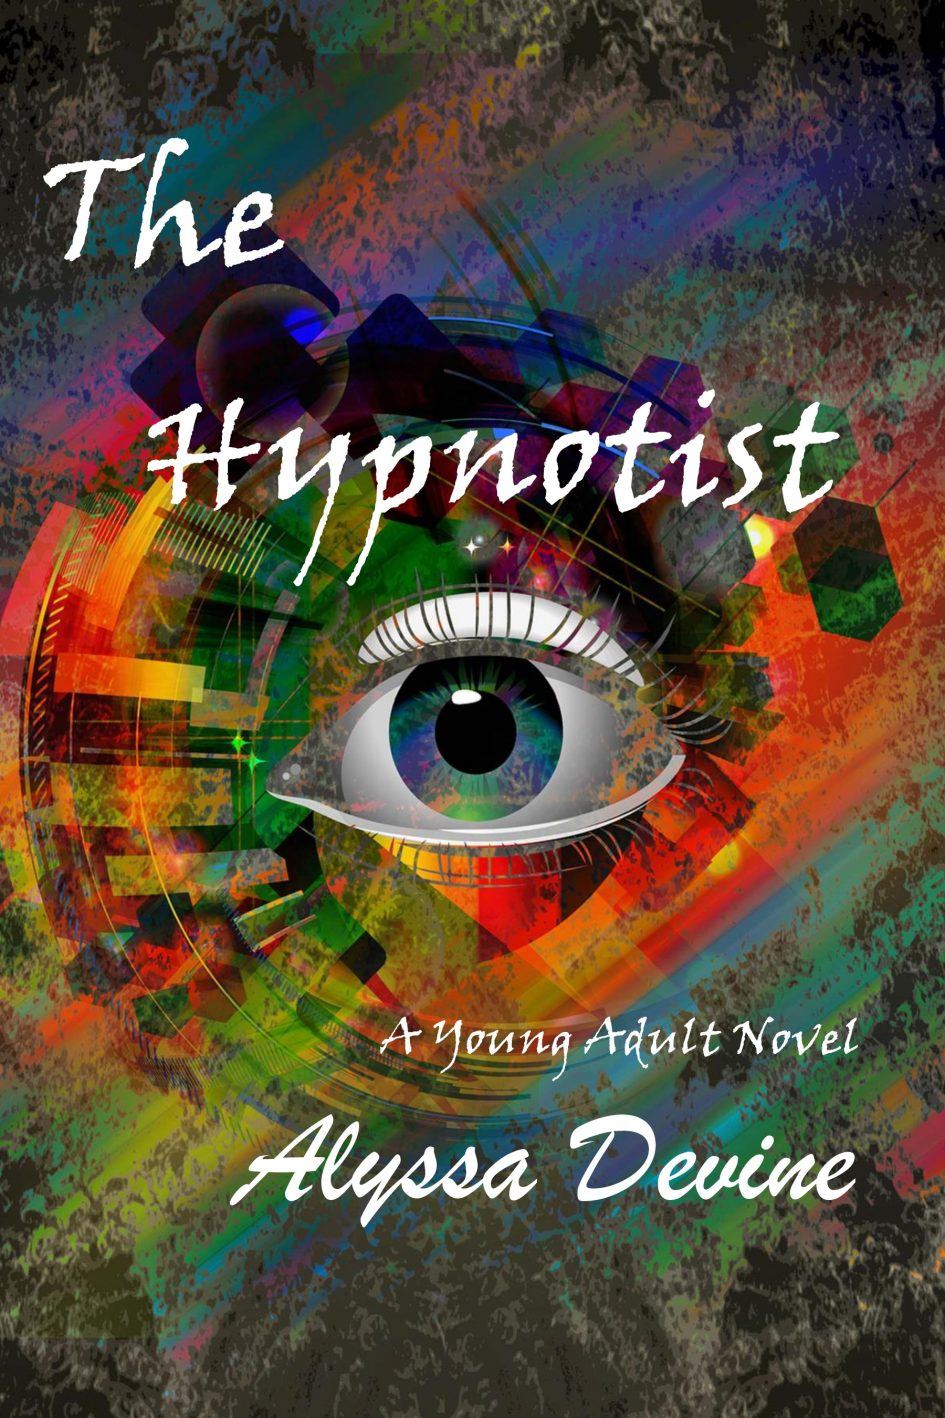 Theodore Cohen Author of "The Hypnotist"